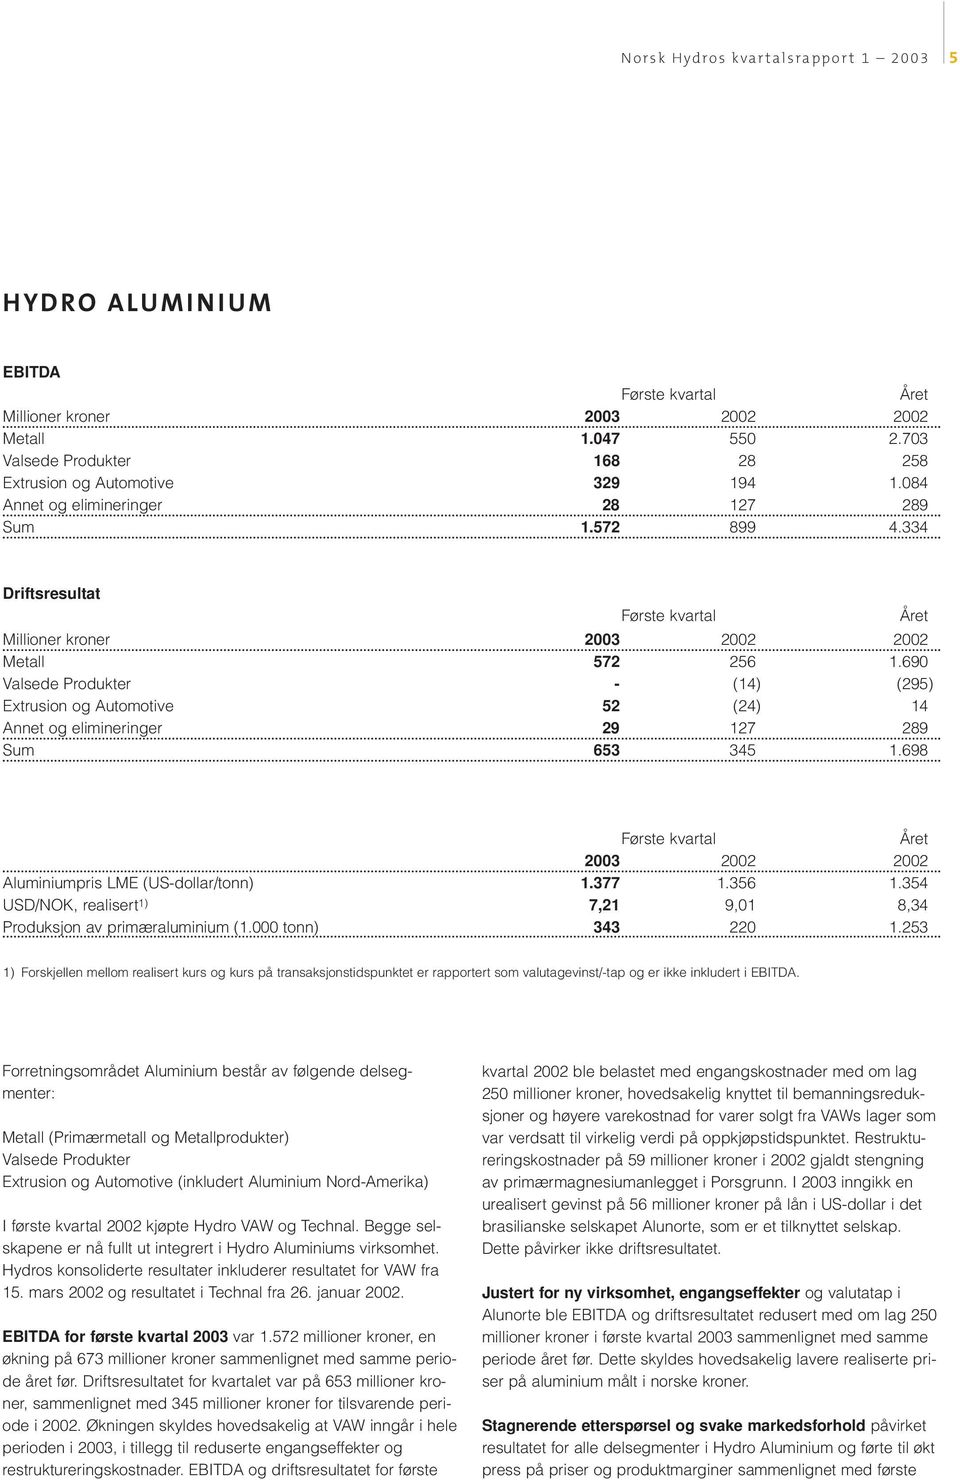 698 2003 2002 2002 Aluminiumpris LME (US-dollar/tonn) 1.377 1.356 1.354 USD/NOK, realisert 1) 7,21 9,01 8,34 Produksjon av primæraluminium (1.000 tonn) 343 220 1.